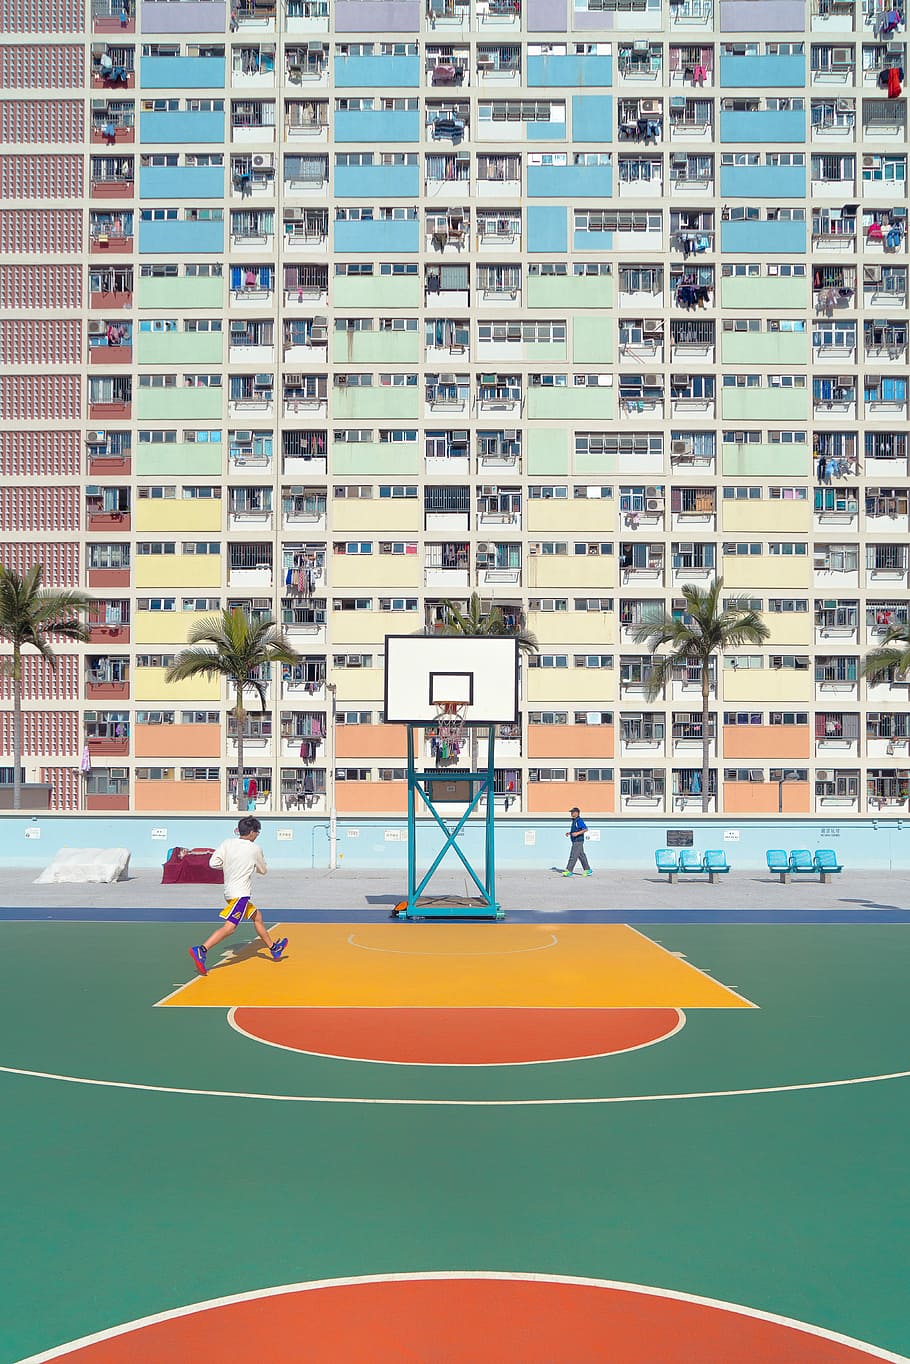 blanco, verde azulado, cancha de baloncesto, edificio, deporte, al aire libre, escena urbana, cancha, baloncesto - deporte, competencia